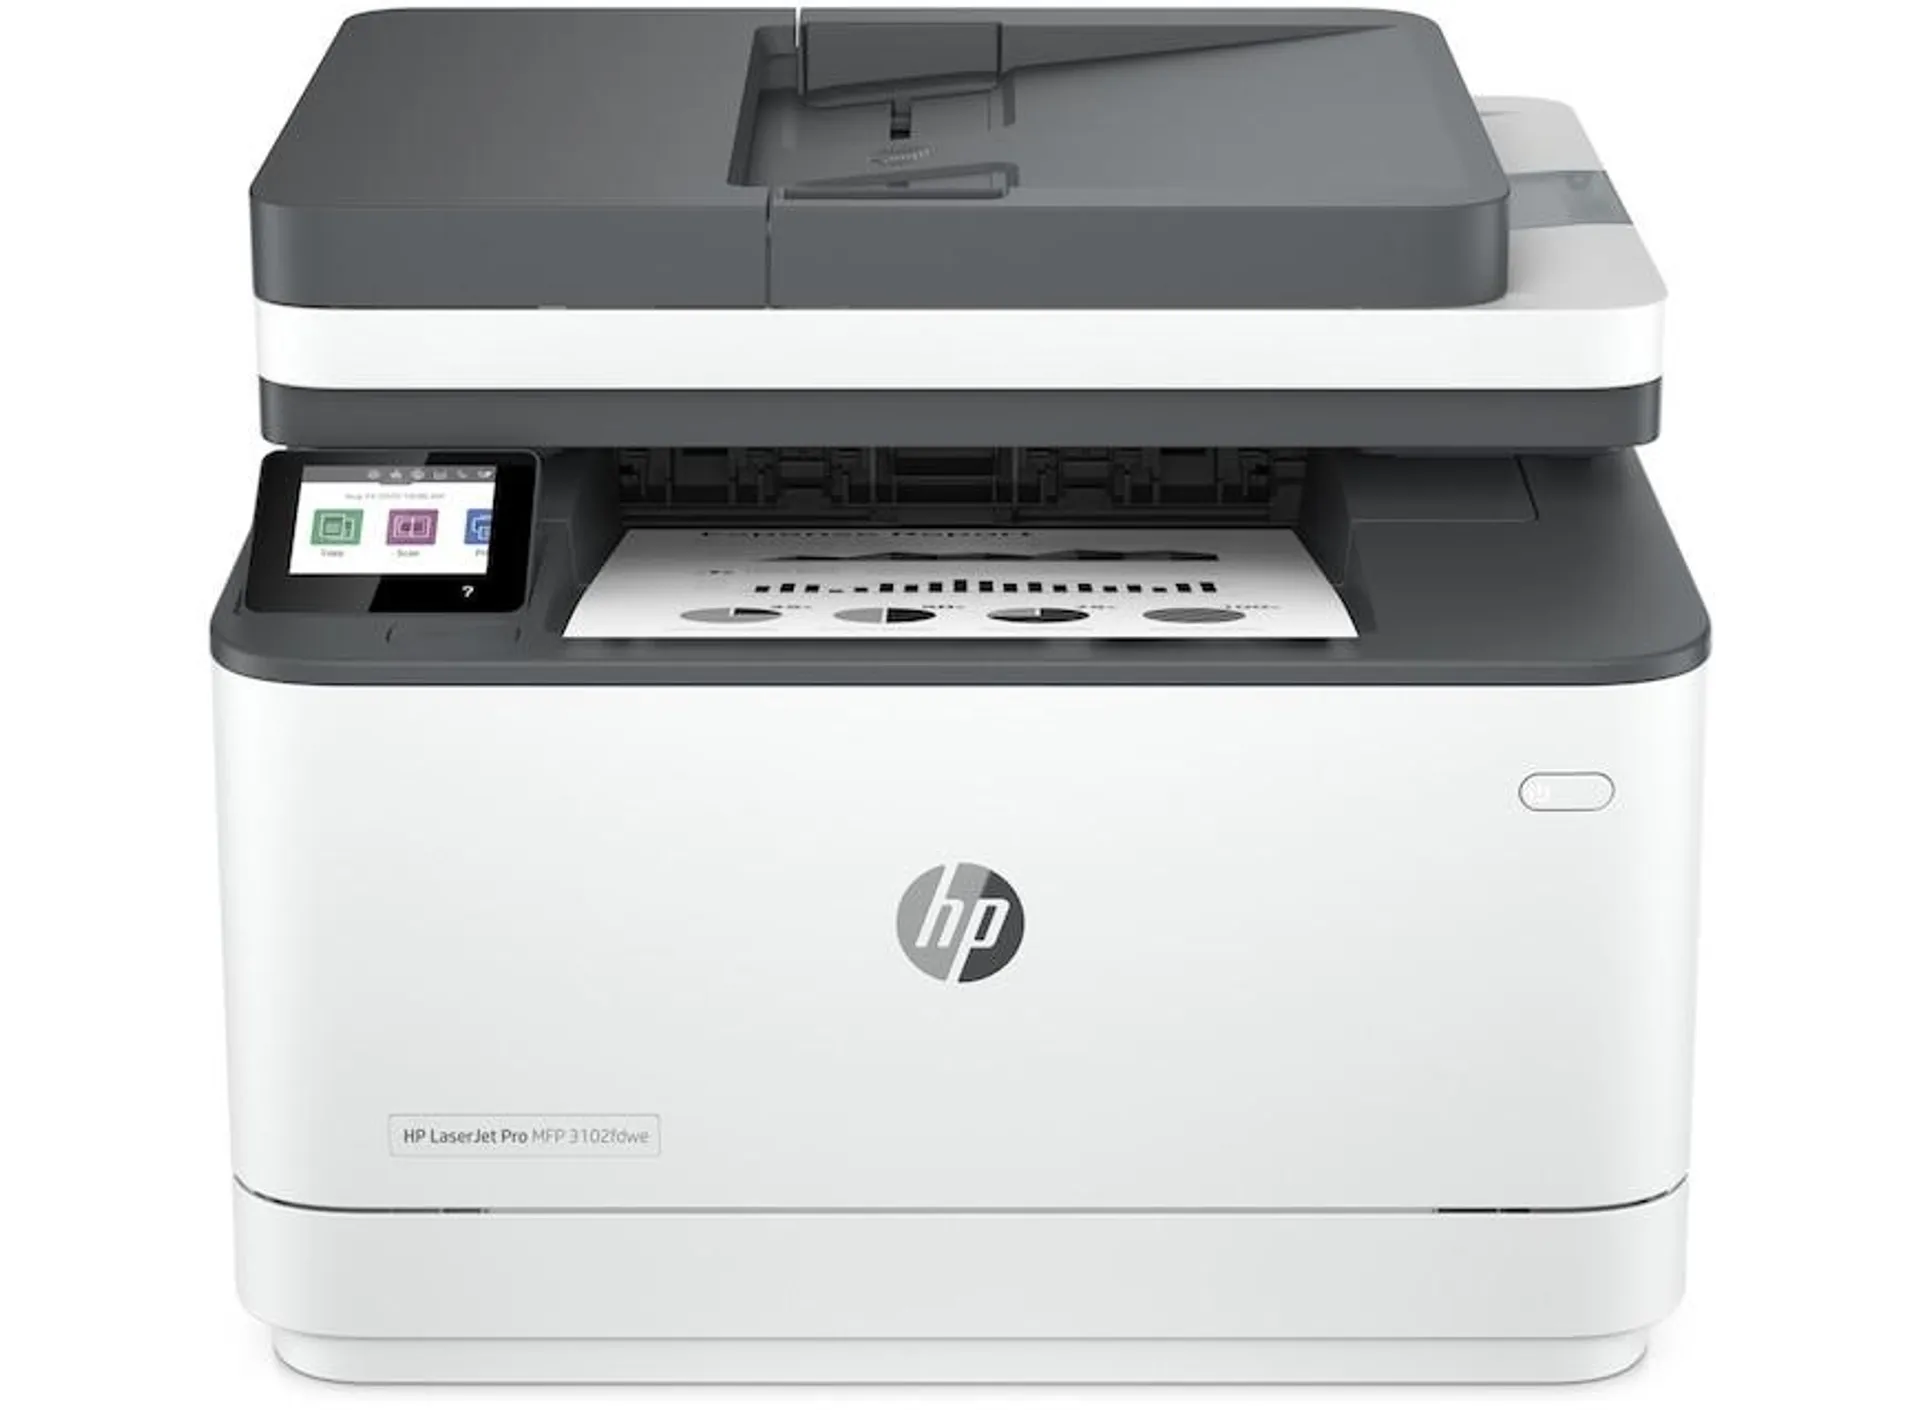 HP LaserJet Pro MFP3102fdwe HP+ Black & White Wireless Printer with 3 Months Instant Ink